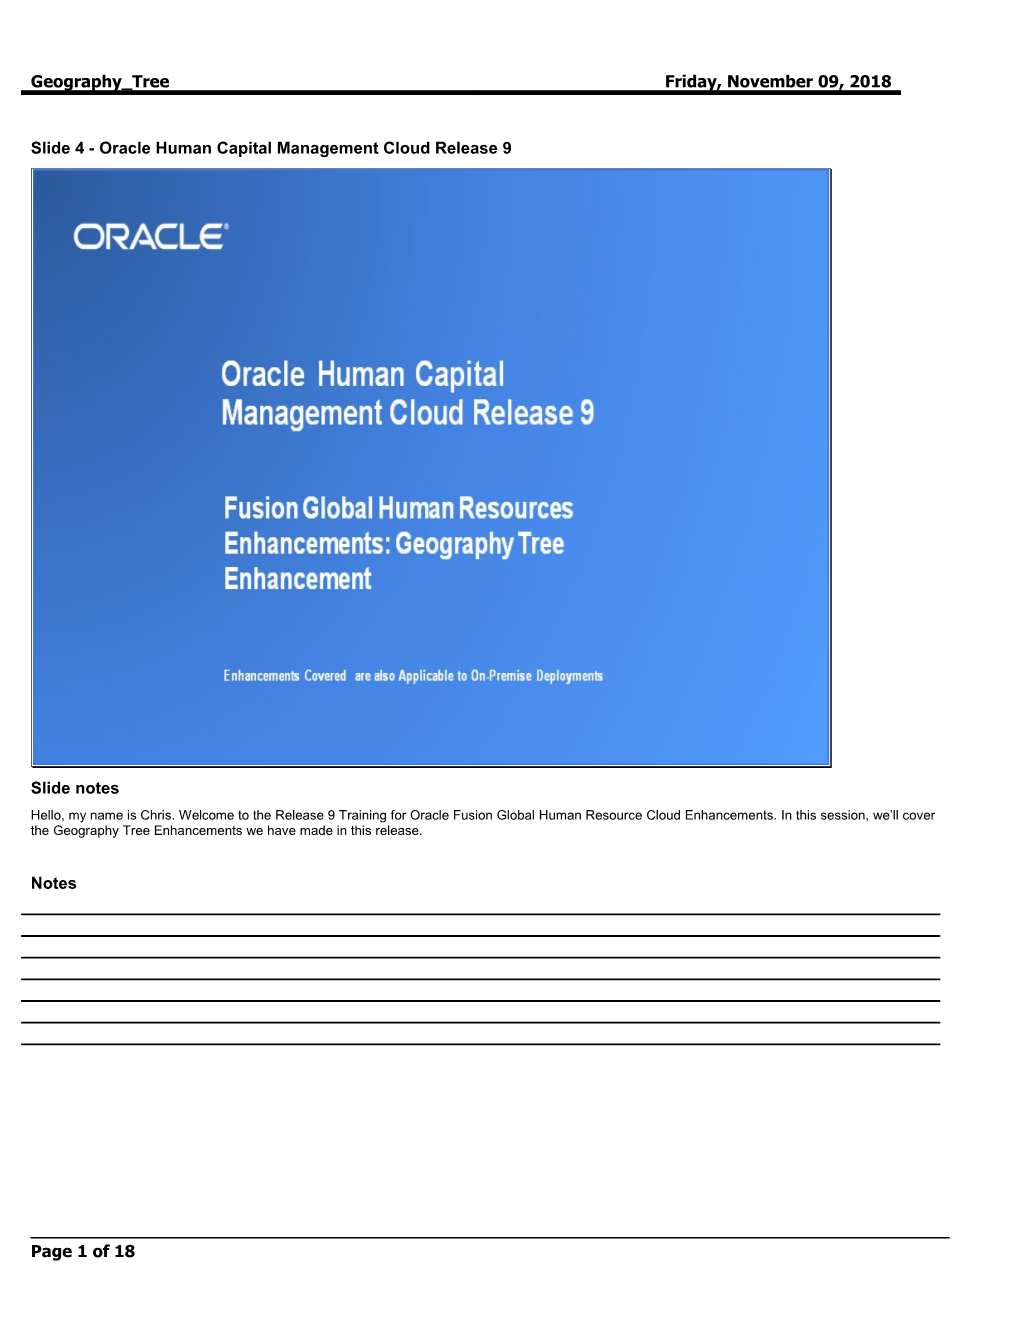 Slide 4 - Oracle Human Capital Management Cloud Release 9